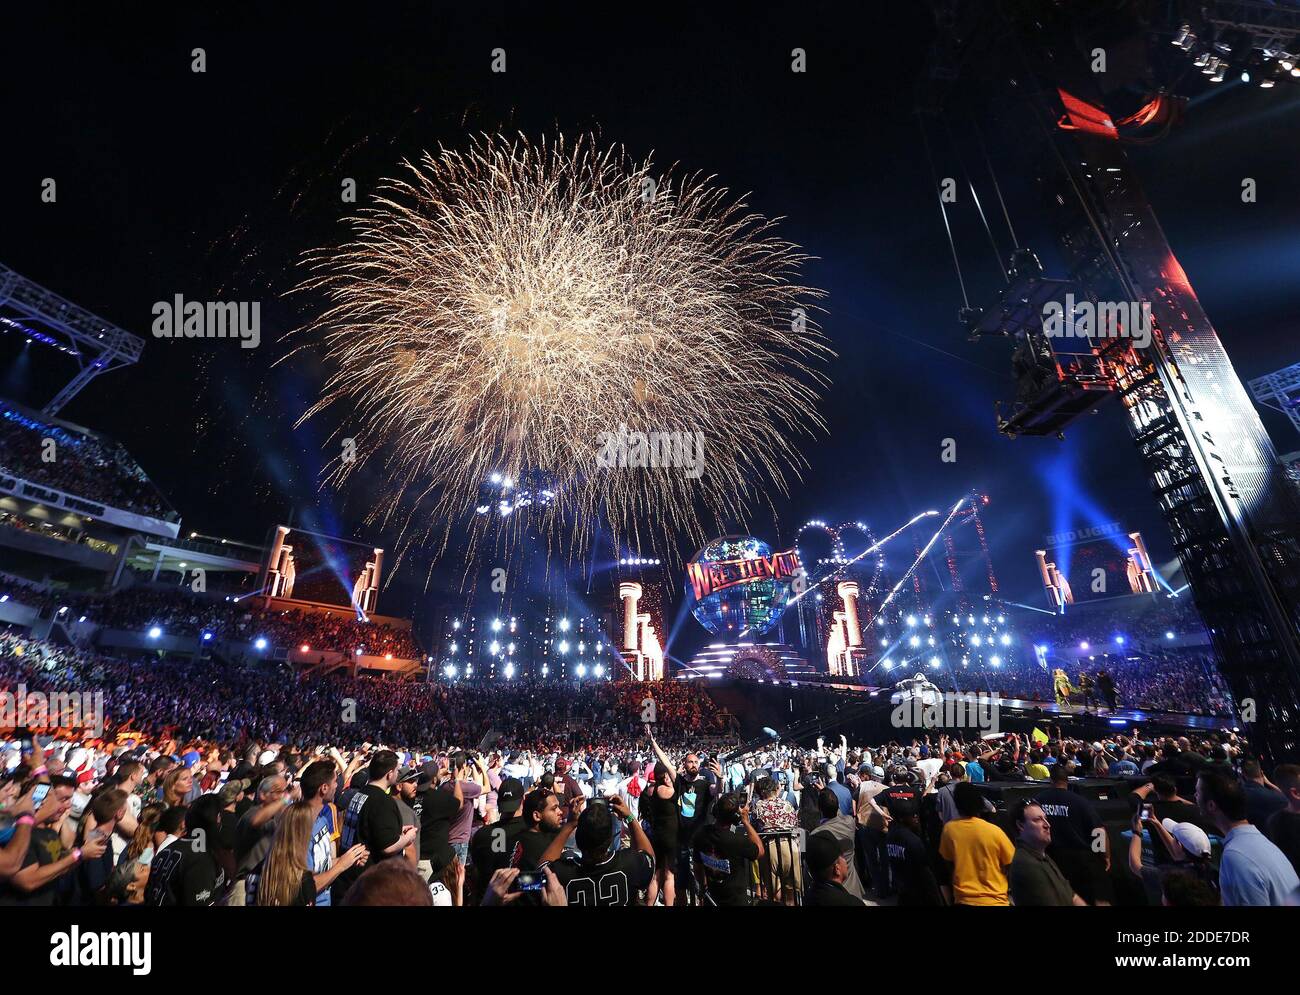 NO FILM, NO VIDEO, NO TV, NO DOCUMENTARY - Fireworks explode during WrestleMania 33 on Sunday, April 2, 2017 at Camping World Stadium in Orlando, FL, USA. Photo by Stephen M. Dowell/Orlando Sentinel/TNS/ABACAPRESS.COM Stock Photo